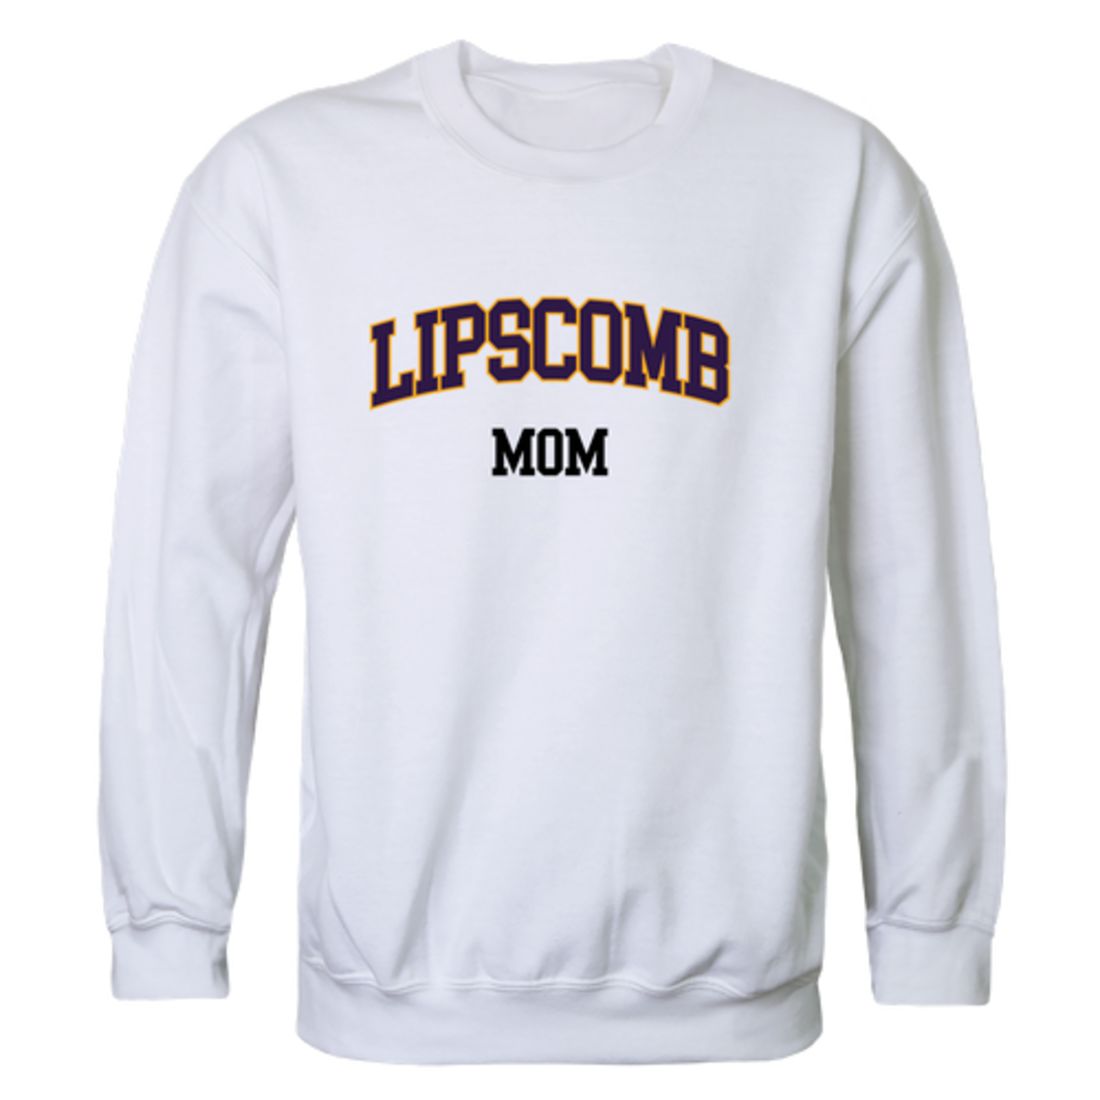 Lipscomb University Bisons Mom Fleece Crewneck Pullover Sweatshirt Heather Charcoal Small-Campus-Wardrobe